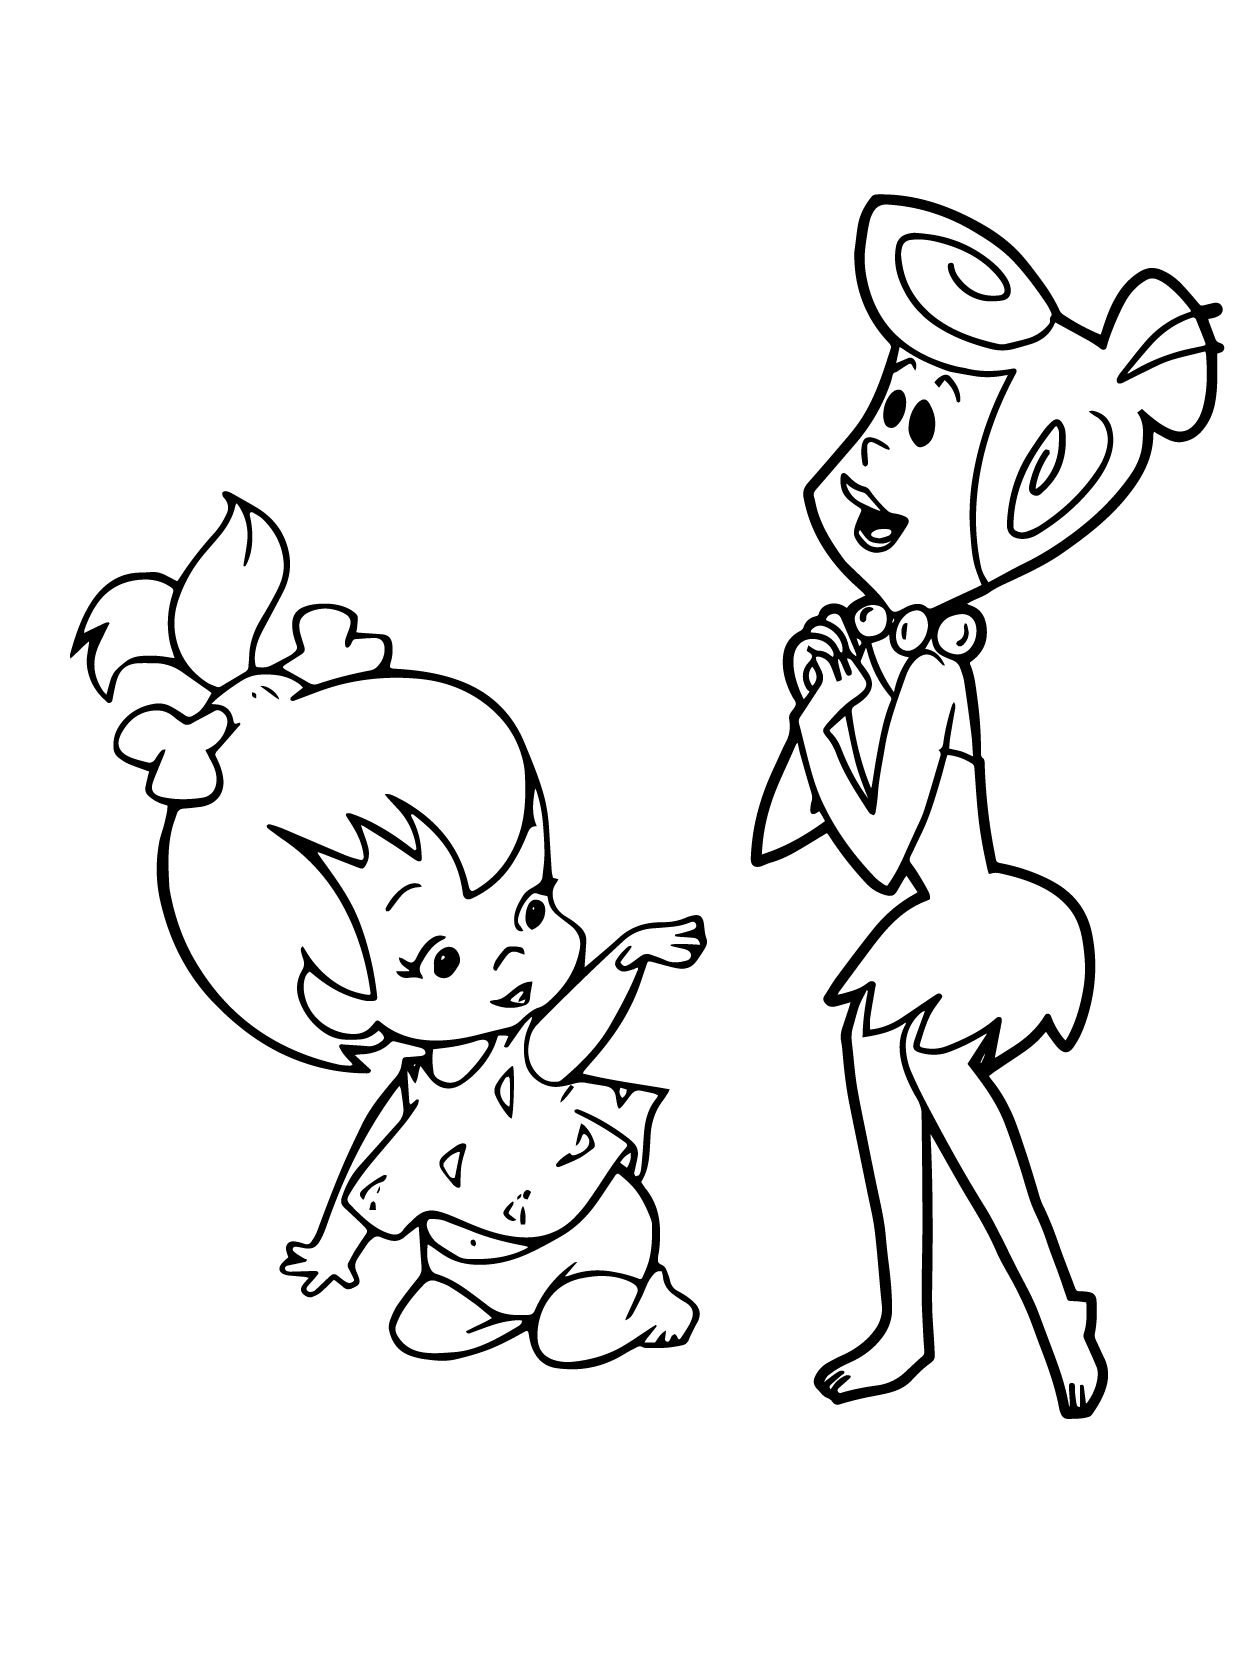 Pebbles and Wilma Flintstone